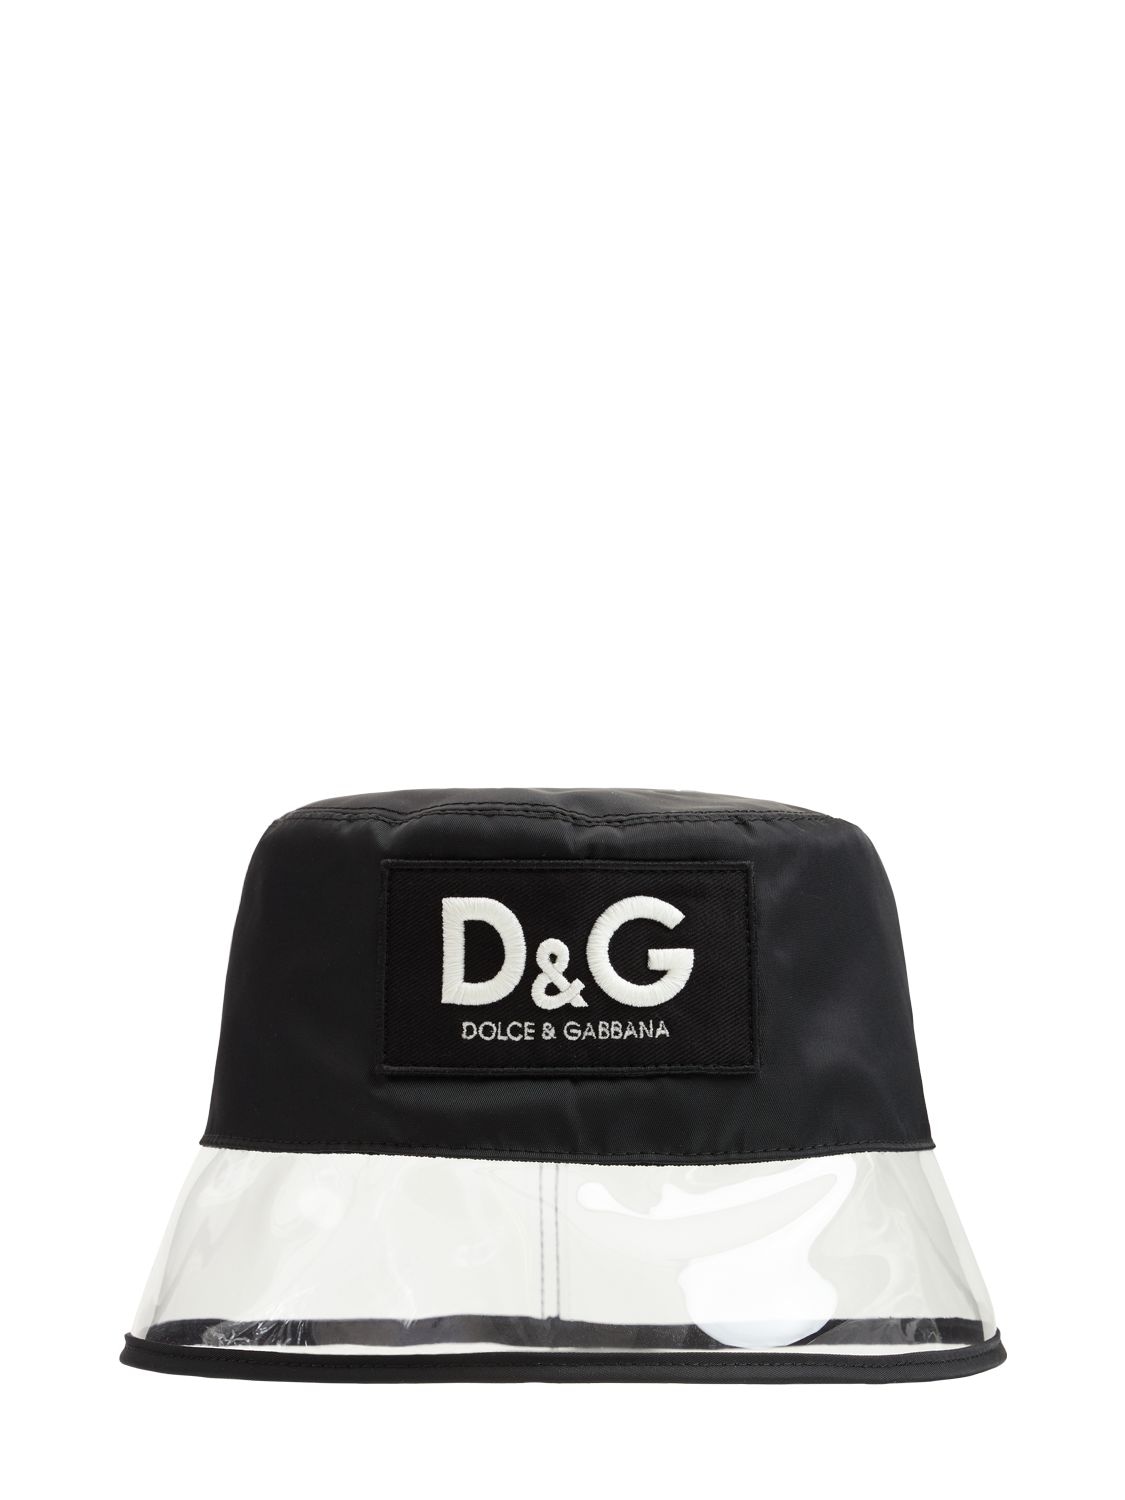 DOLCE & GABBANA D&G科技织物&塑料渔夫帽,74IG2H001-TJAWMDA1